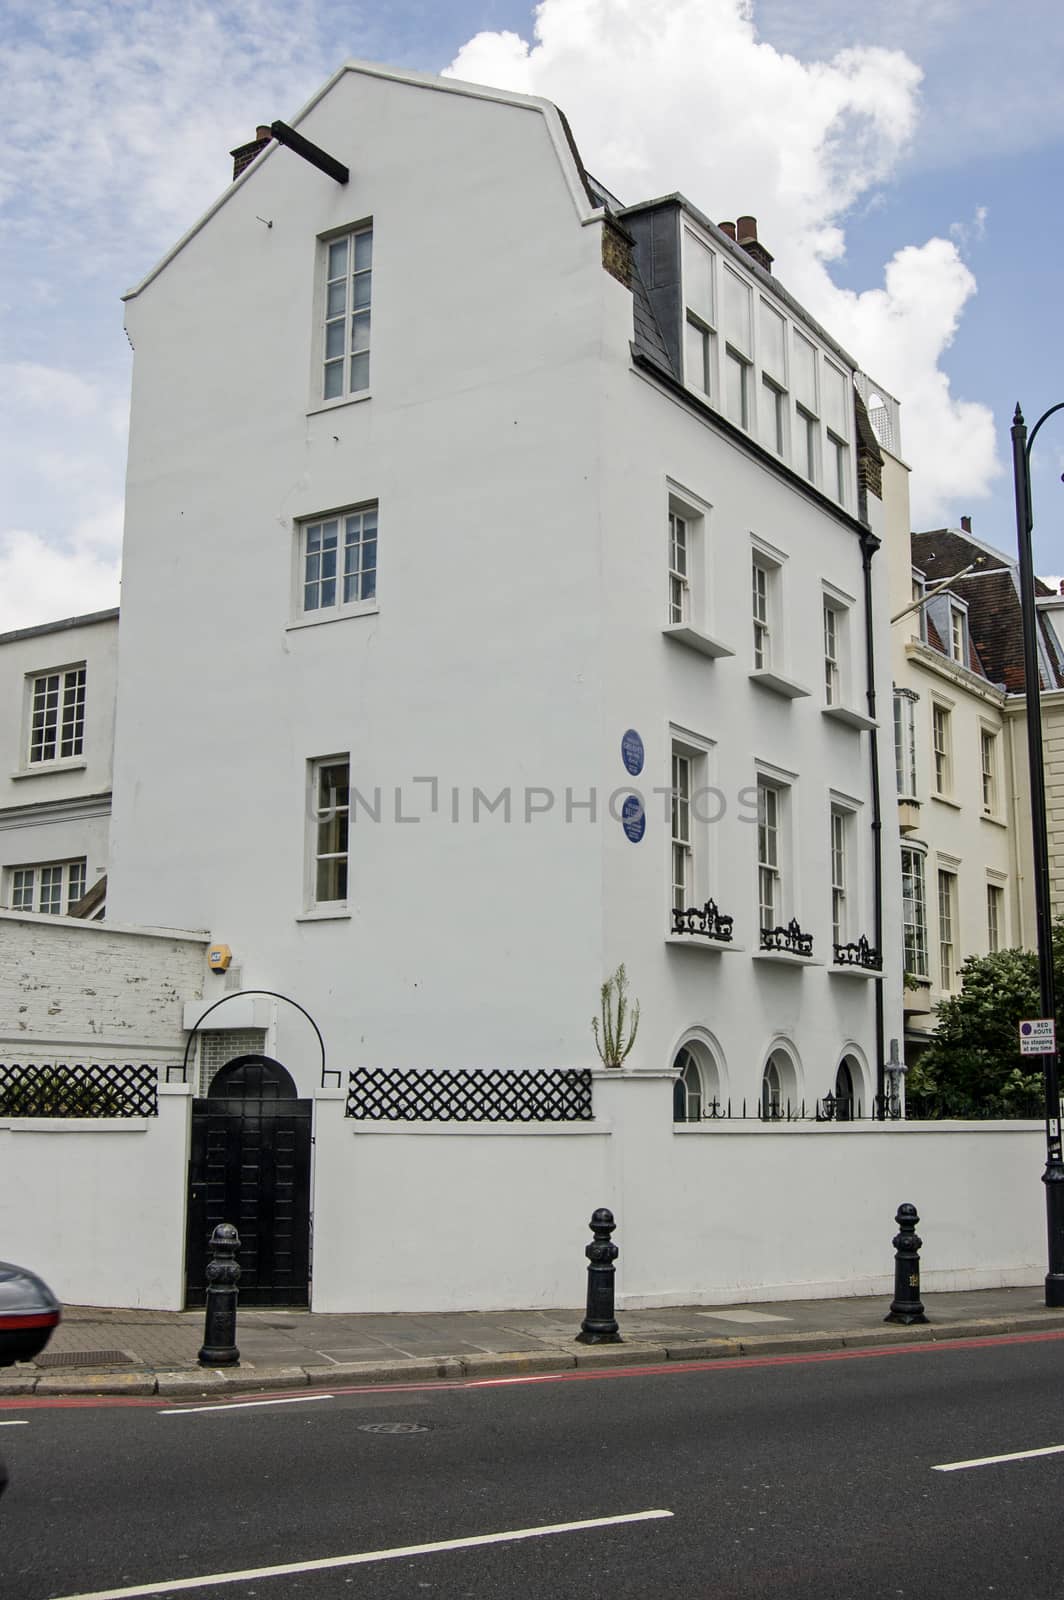 Historic Home of Hilaire Belloc, Chelsea, London by BasPhoto